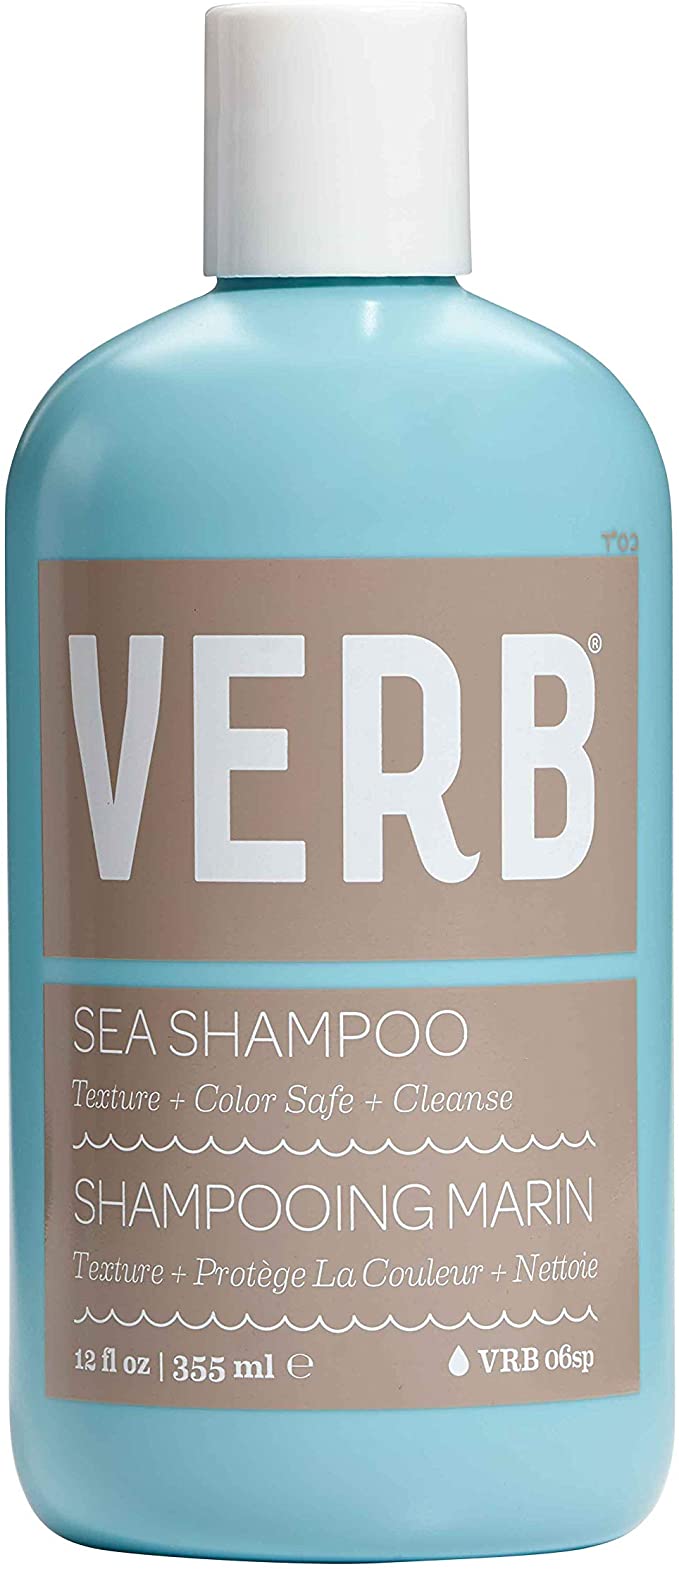 VERB - Sea Shampoo - Texture+Color Safe+Cleanse